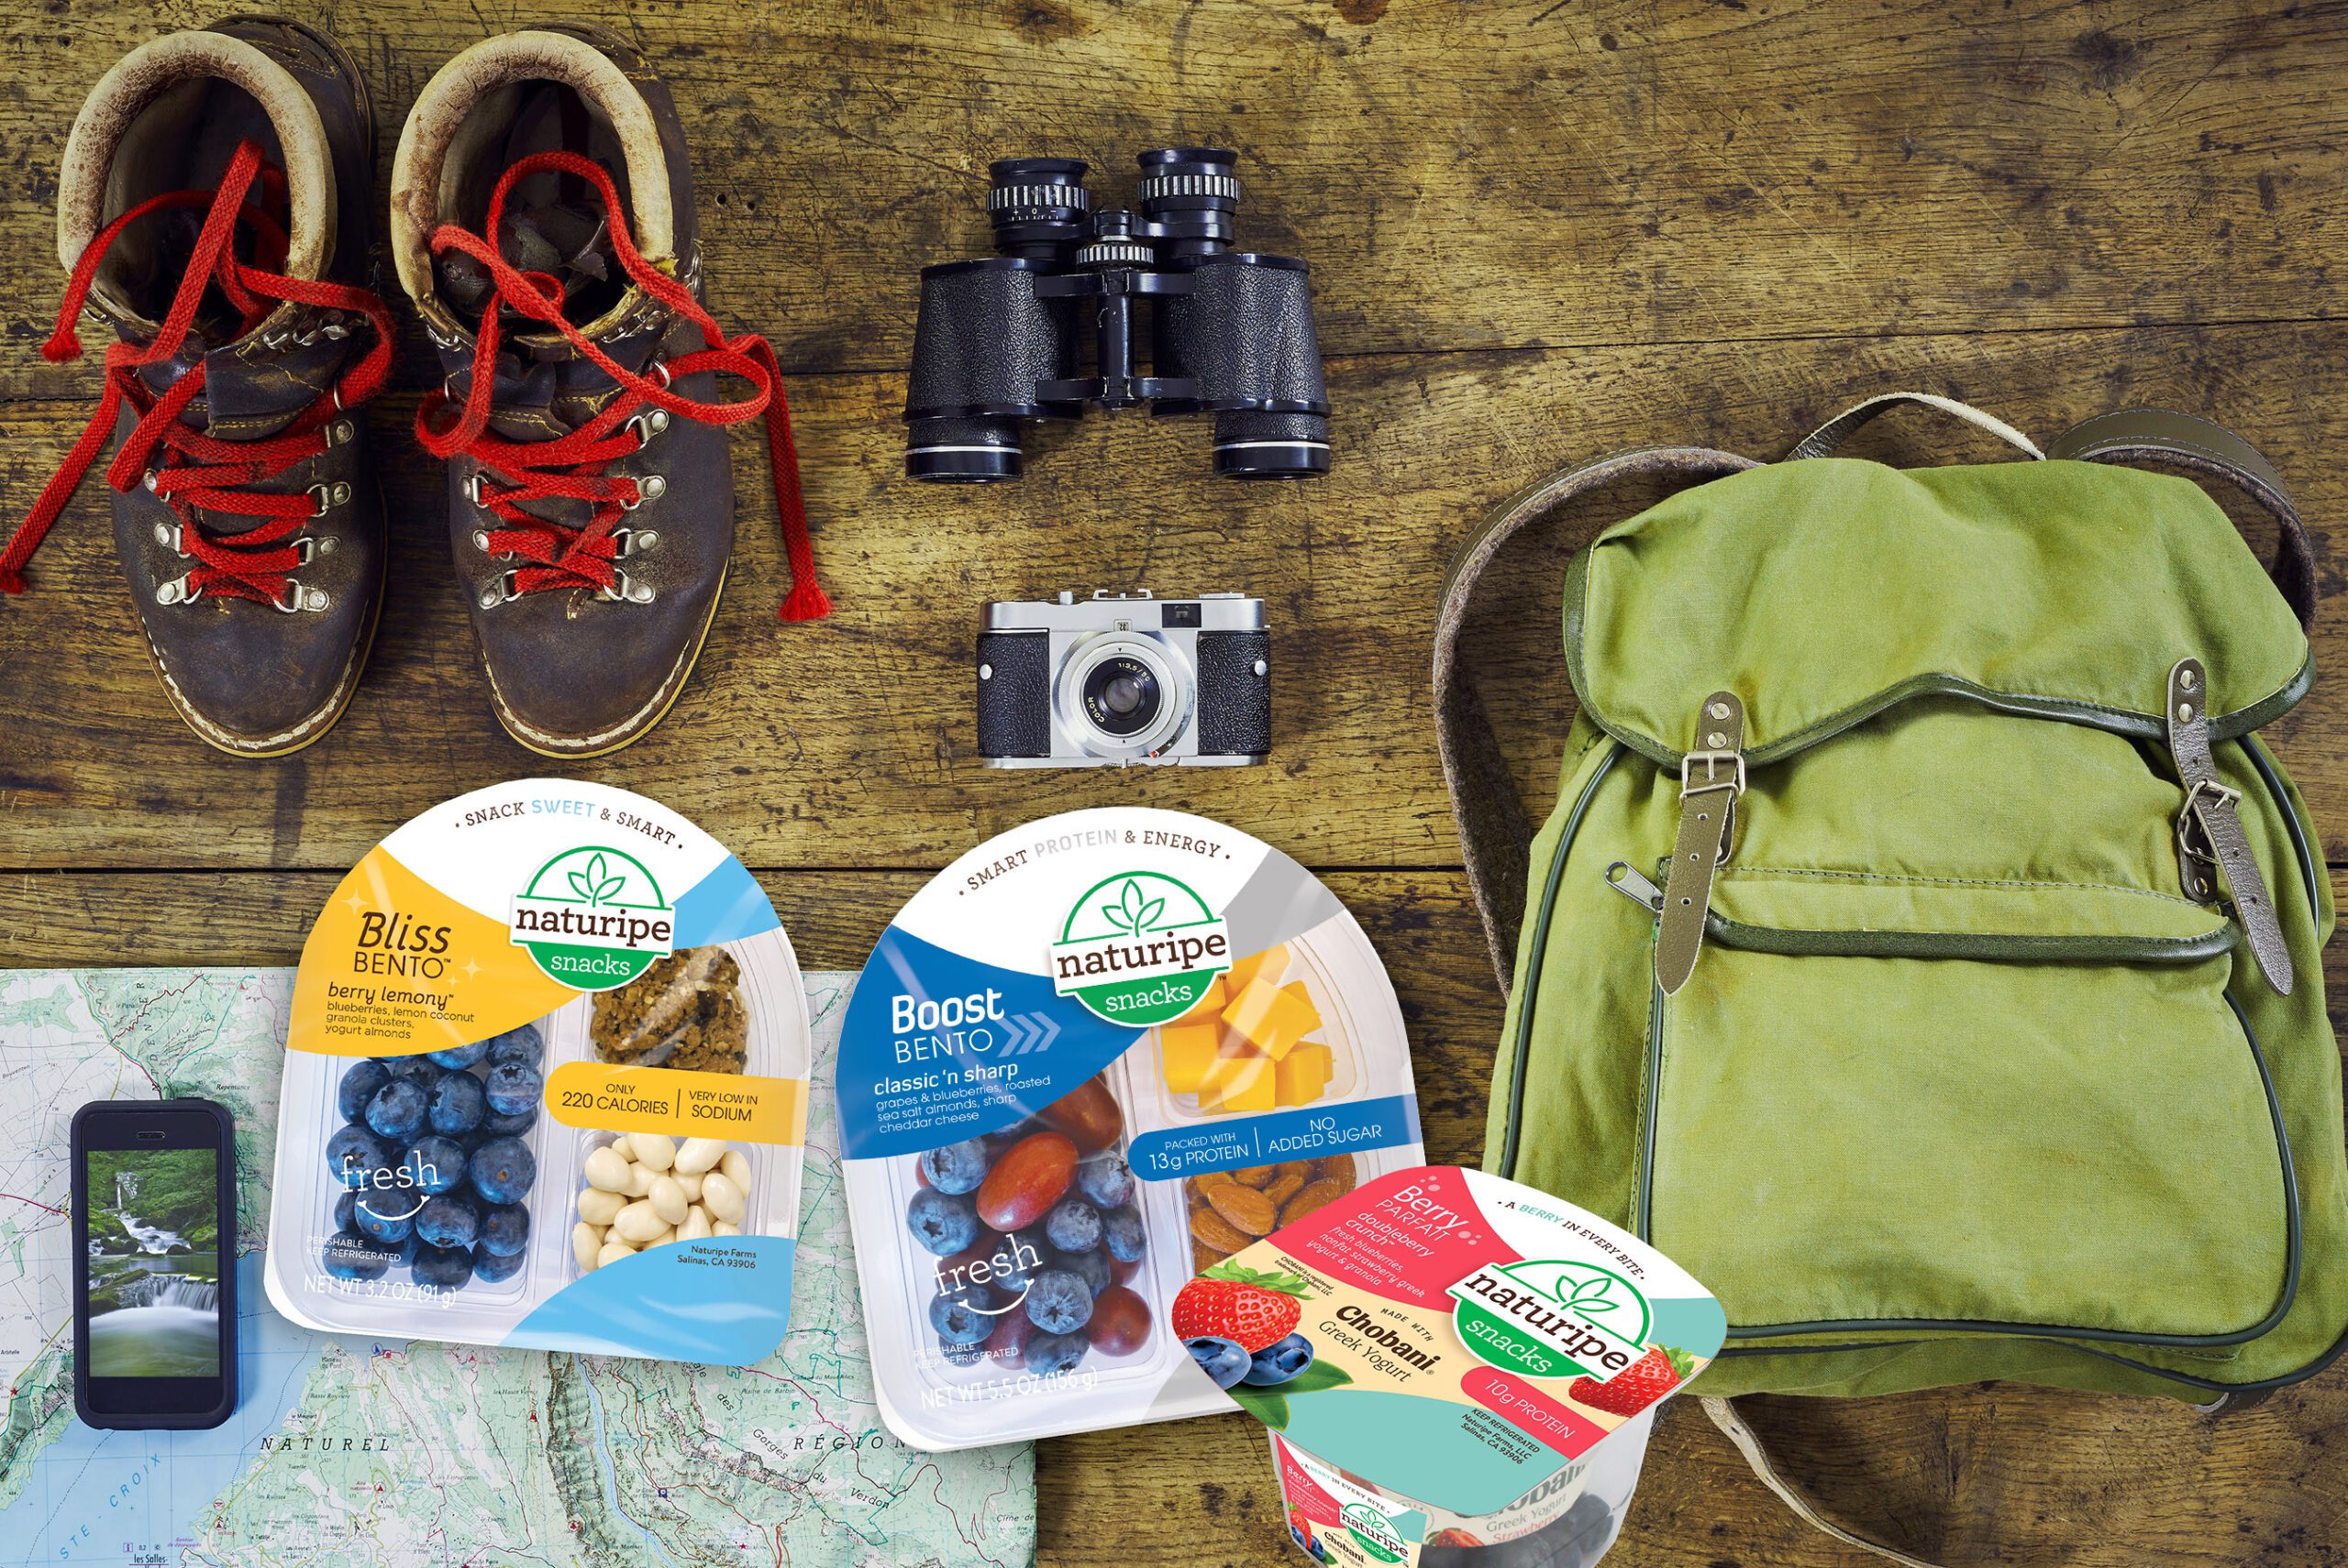 Naturipe Bentos and Yogurts with backpack, binoculars and shoes